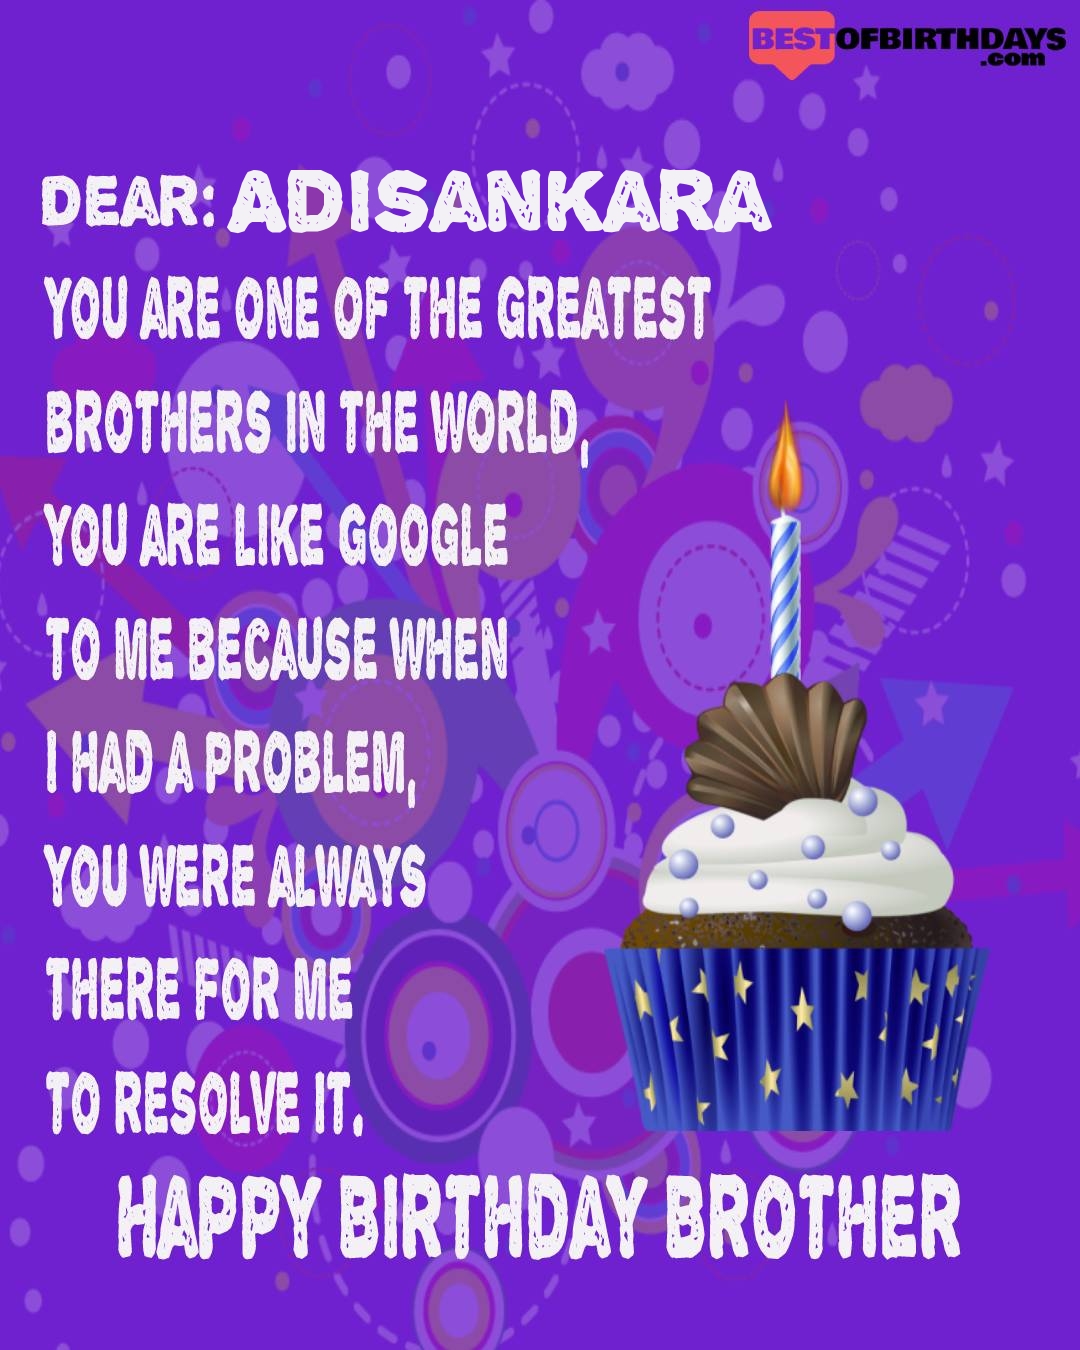 Happy birthday adisankara bhai brother bro